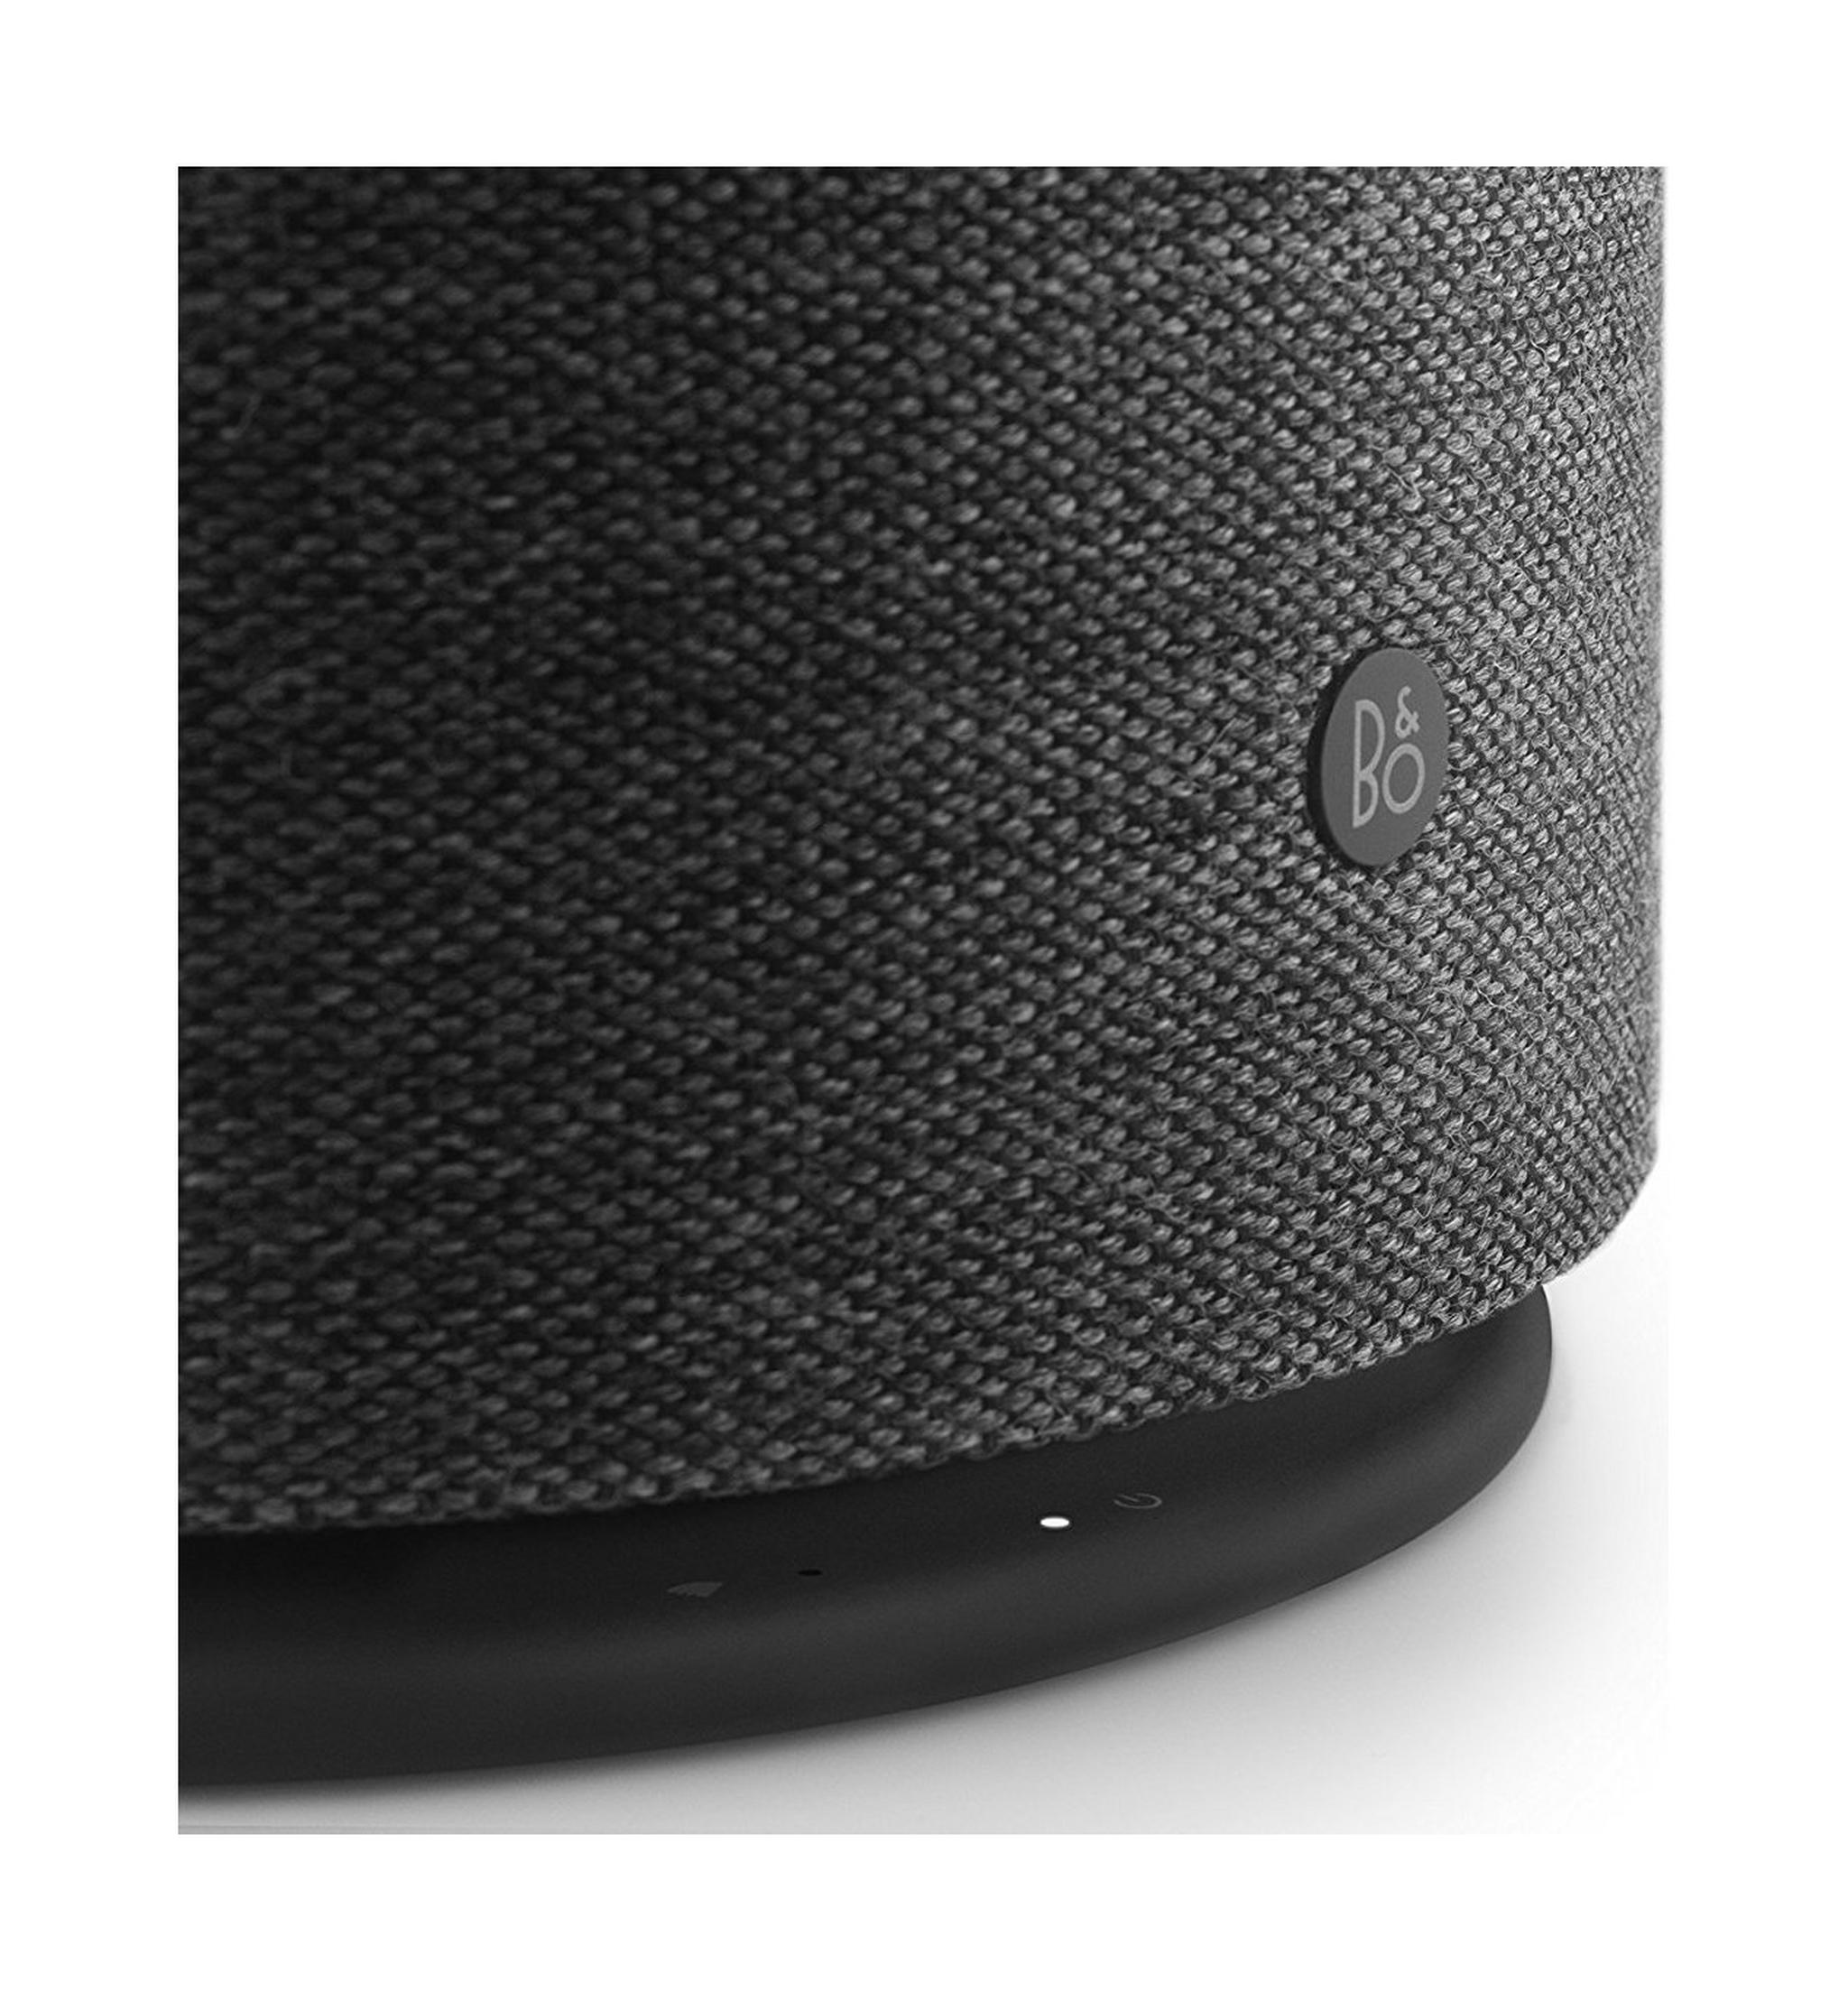 Bang & Olufsen Beoplay M5 Bluetooth & Wifi Wireless Speaker - Black